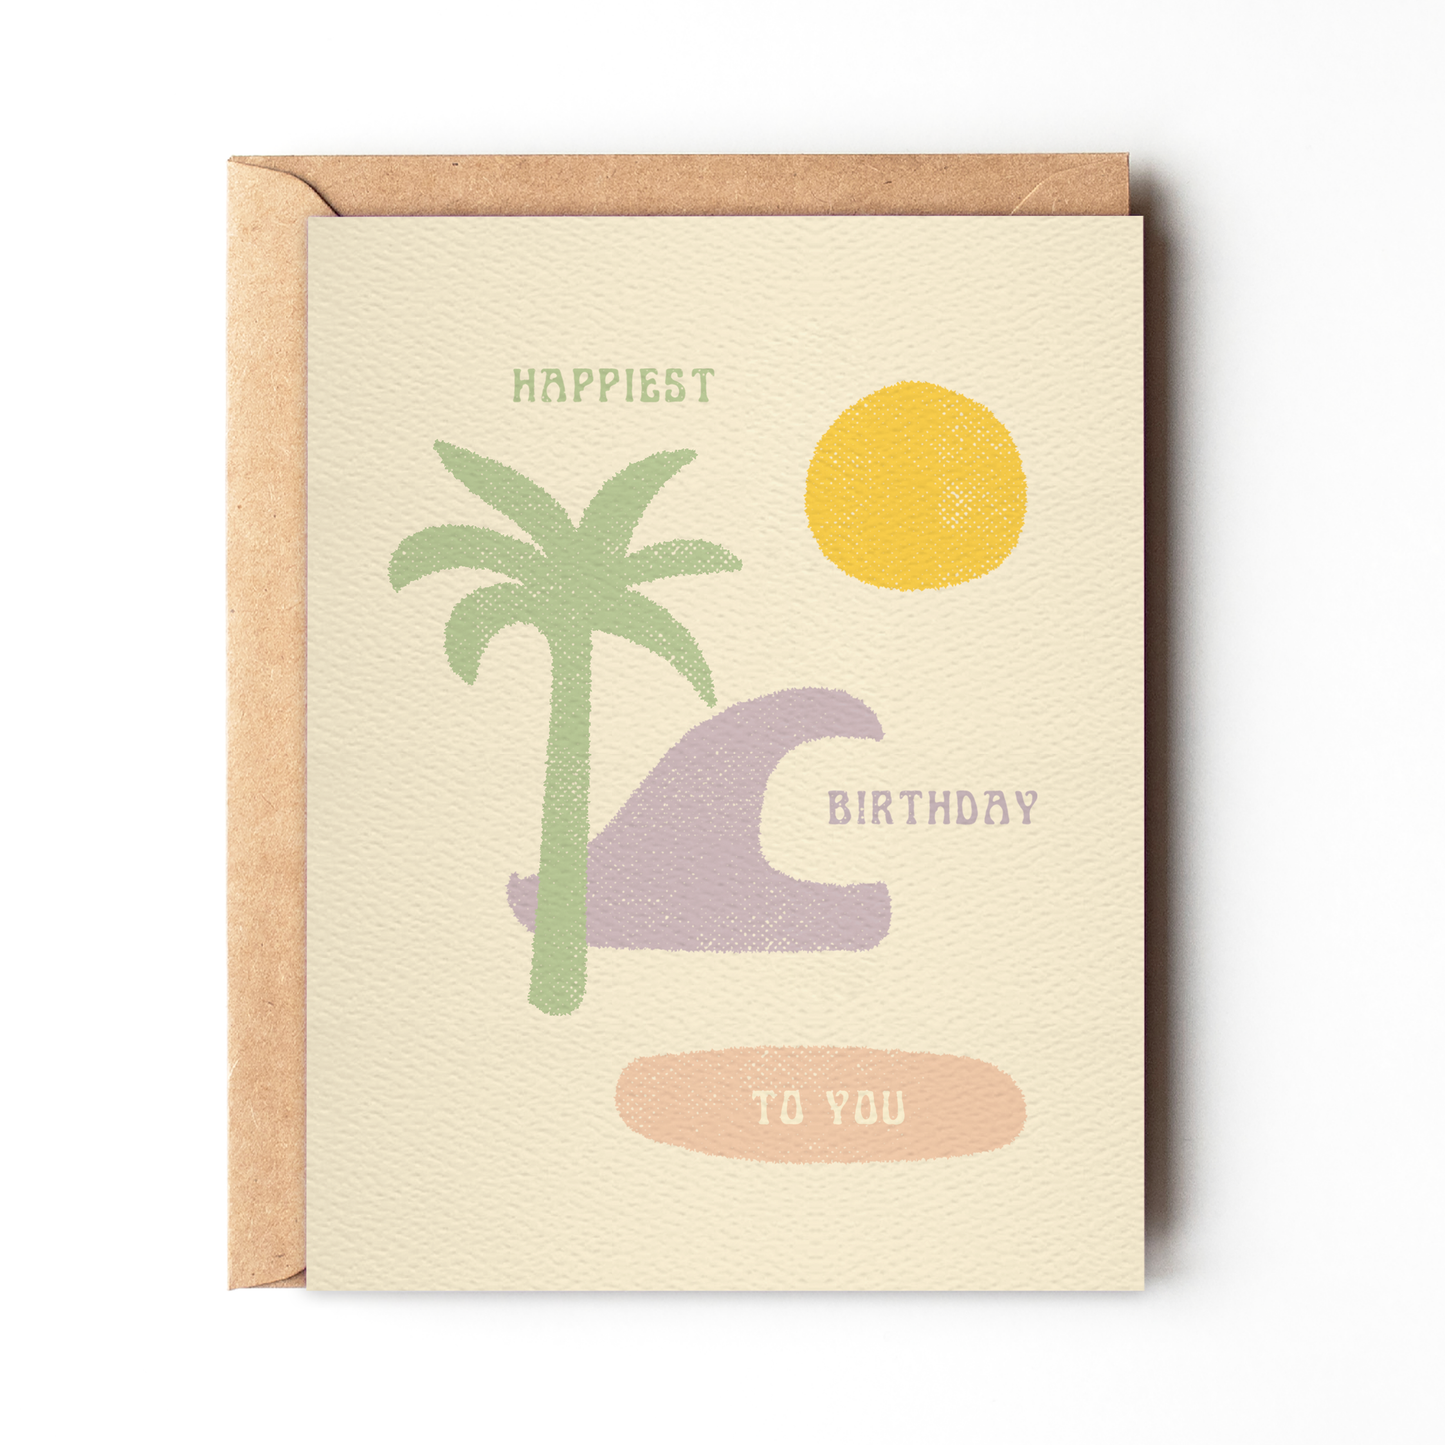 Daydream Prints - Happiest Birthday - Summer beach birthday card